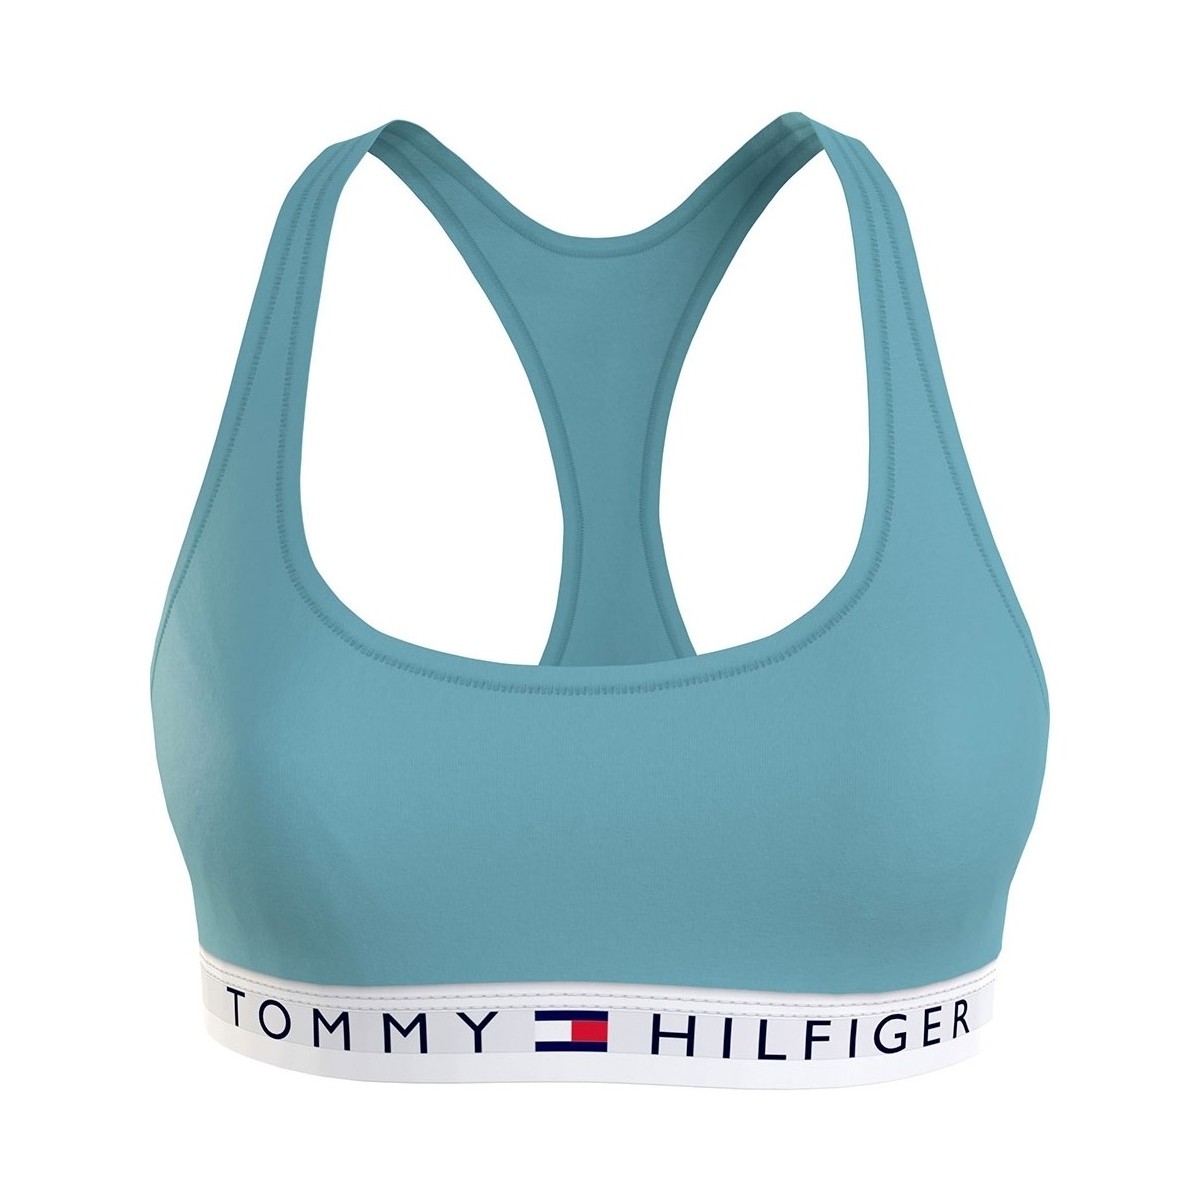 Sous-vêtements Femme Culottes & slips Tommy Hilfiger Brassiere  ref 53984 MSK Bleu Bleu